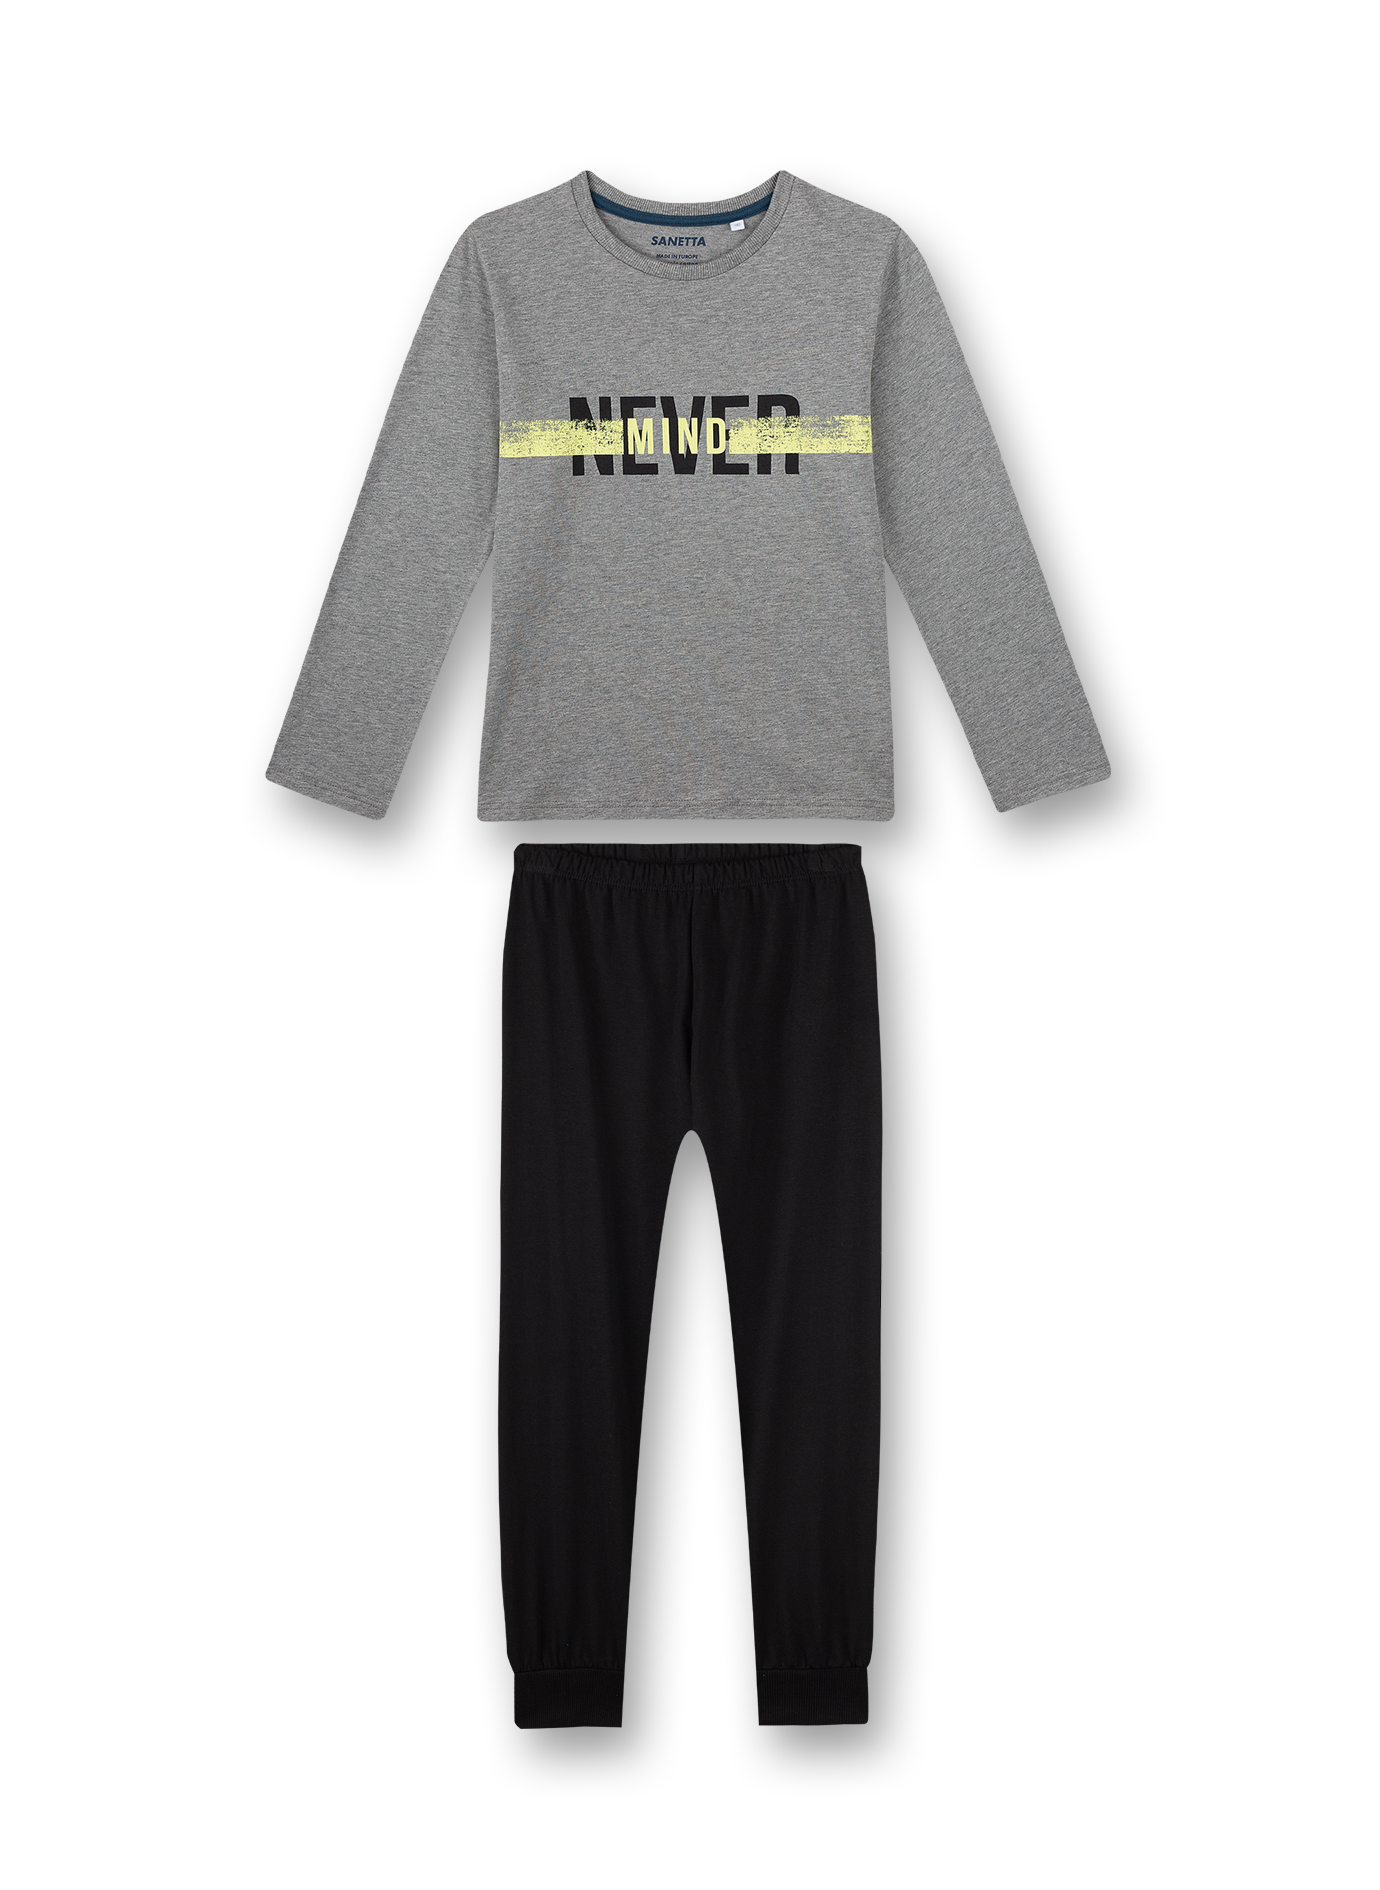 Jungen-Schlafanzug lang Graumelange Skate